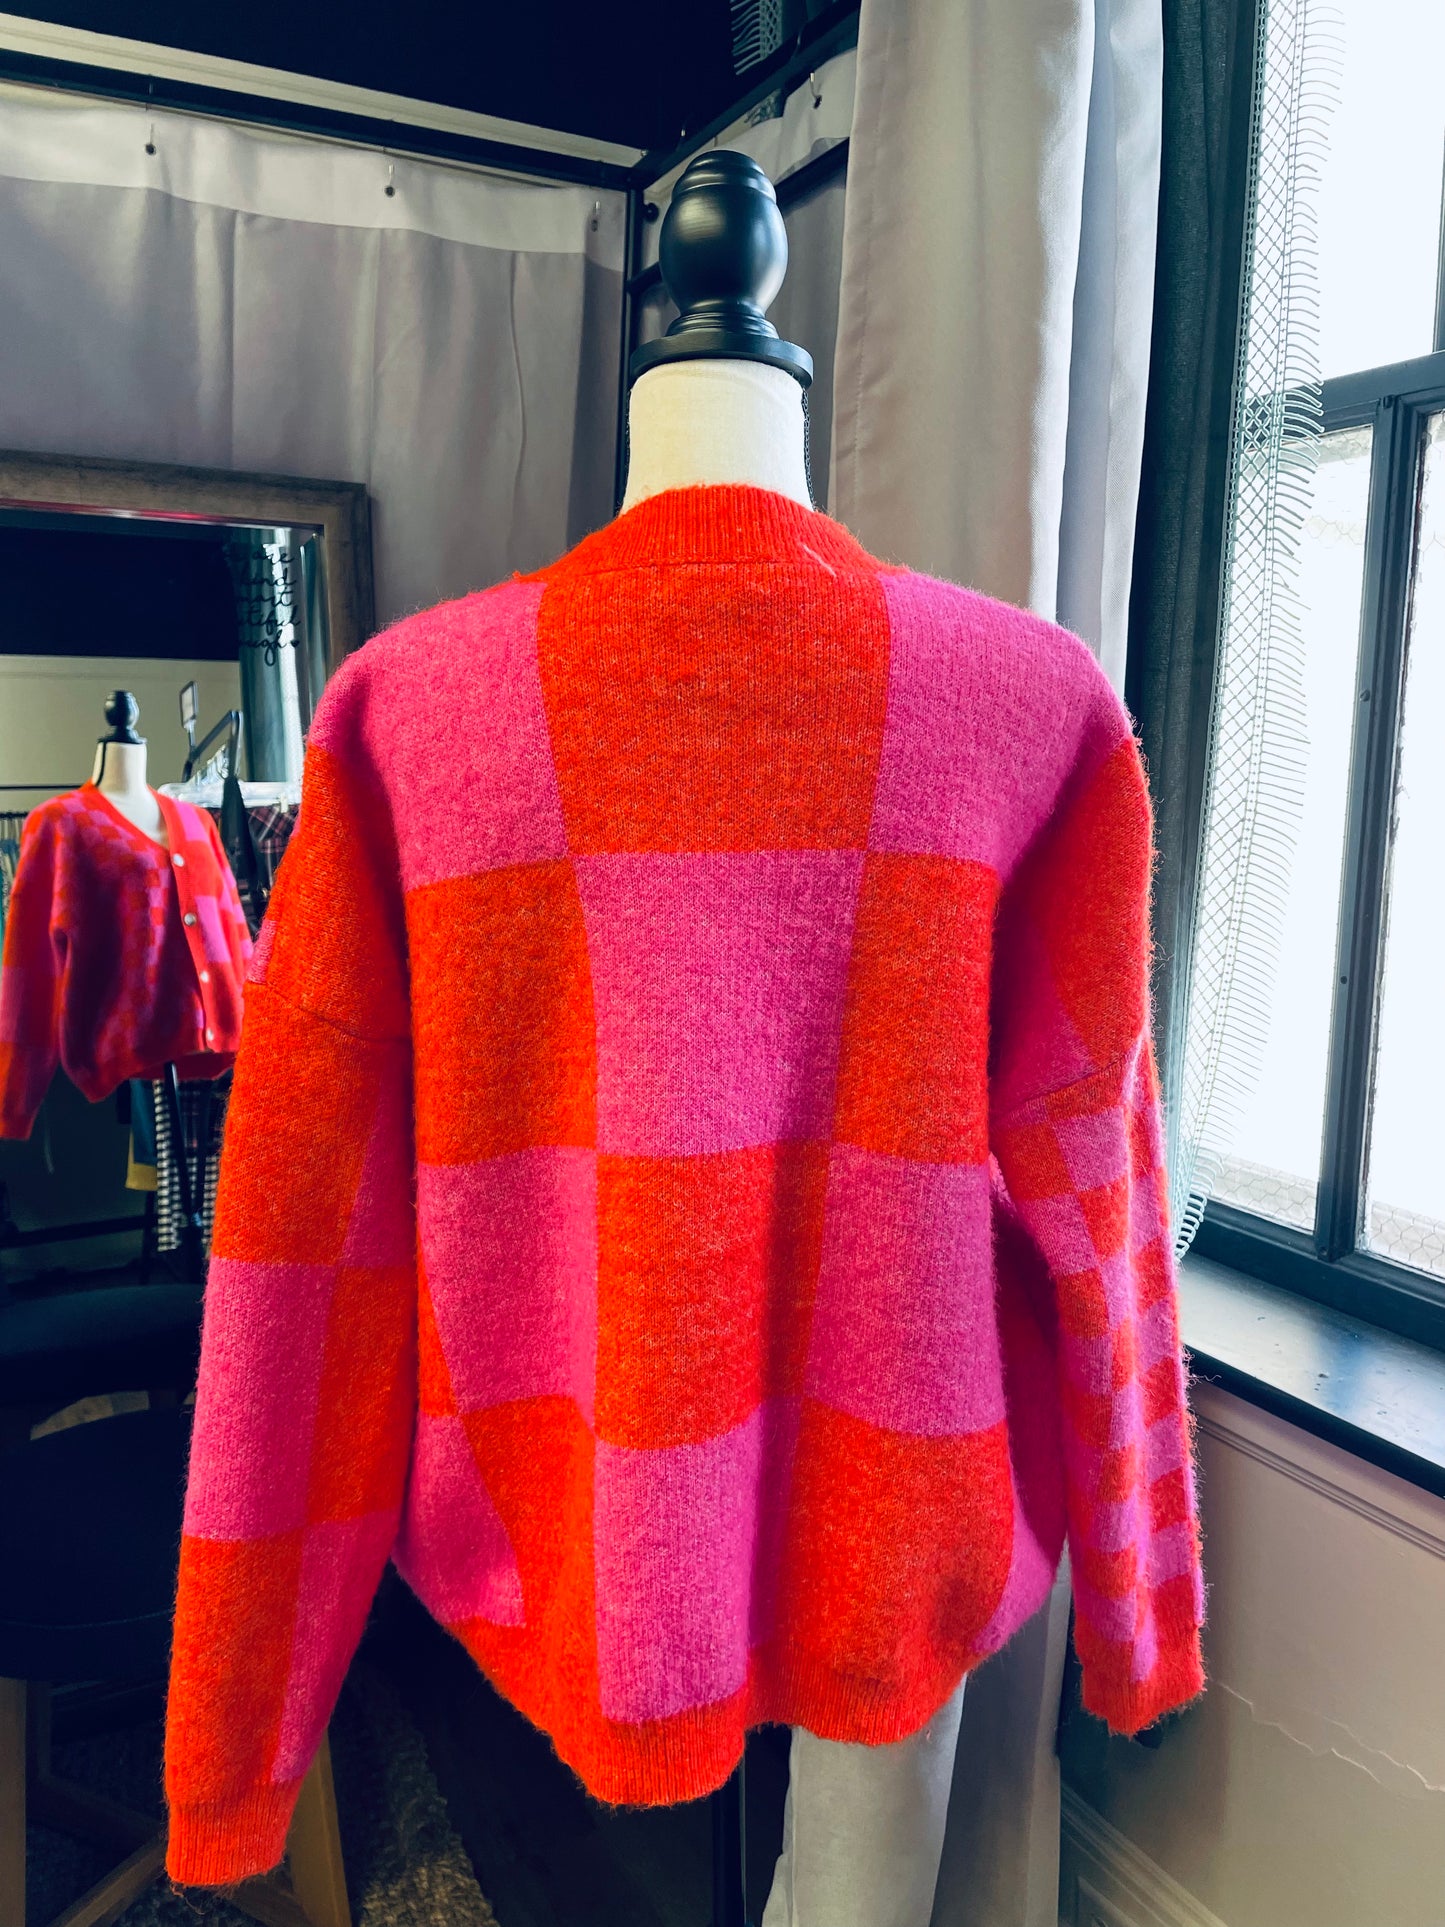 Shop Neighbor Plaid Sweater (S)